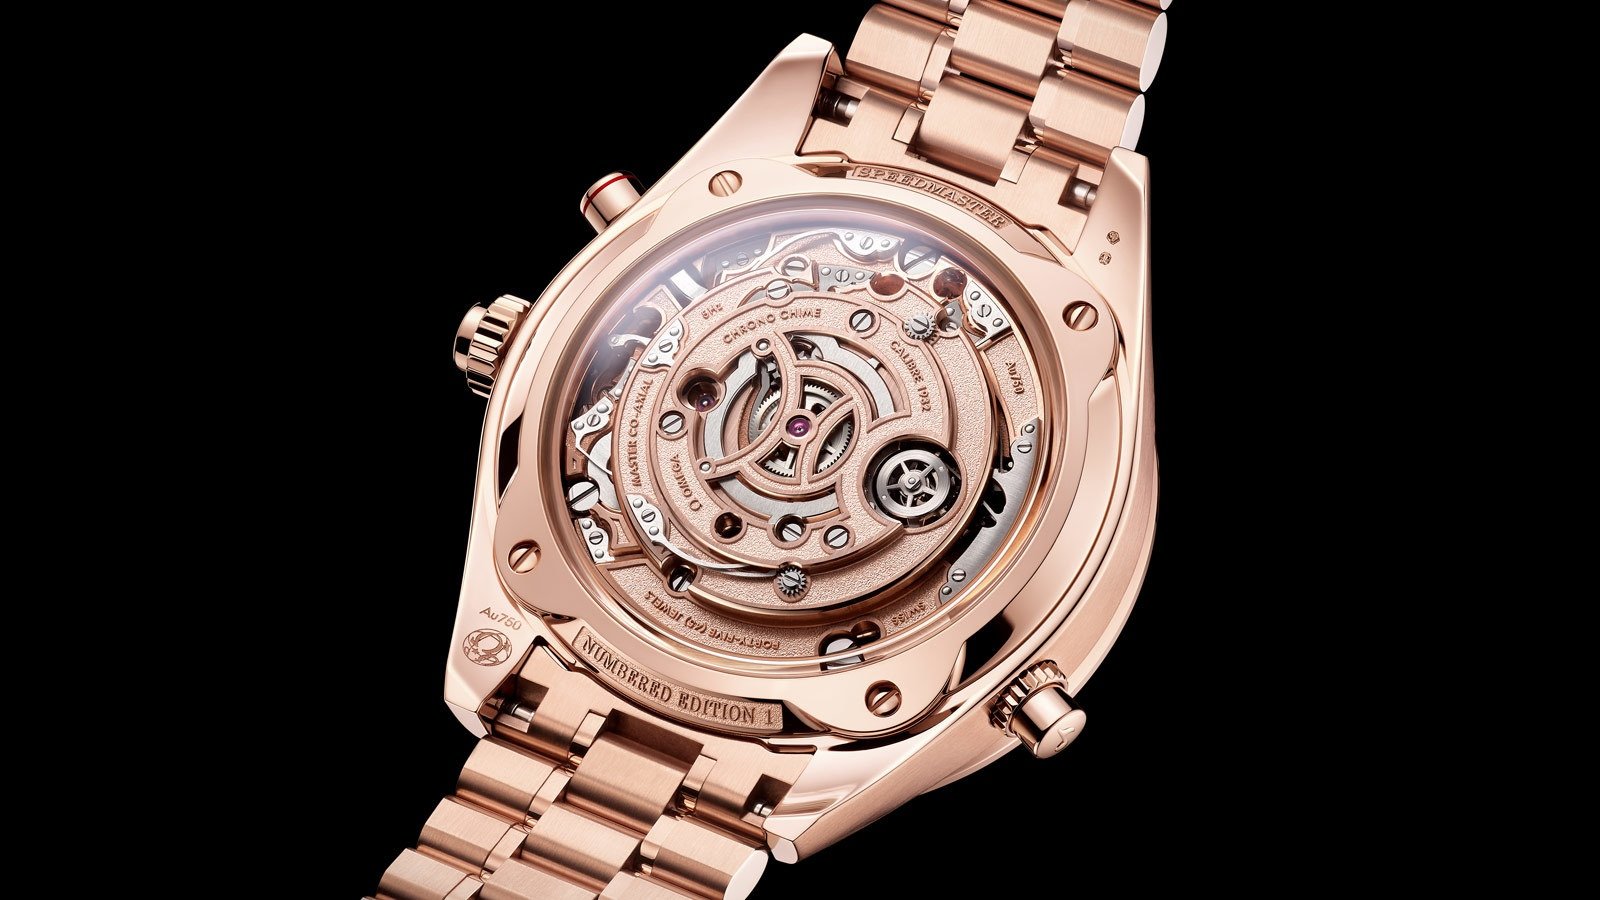 Chrono Chime Speedmaster Sedna™ gold Chronograph Watch 522.50.45.52.03.001